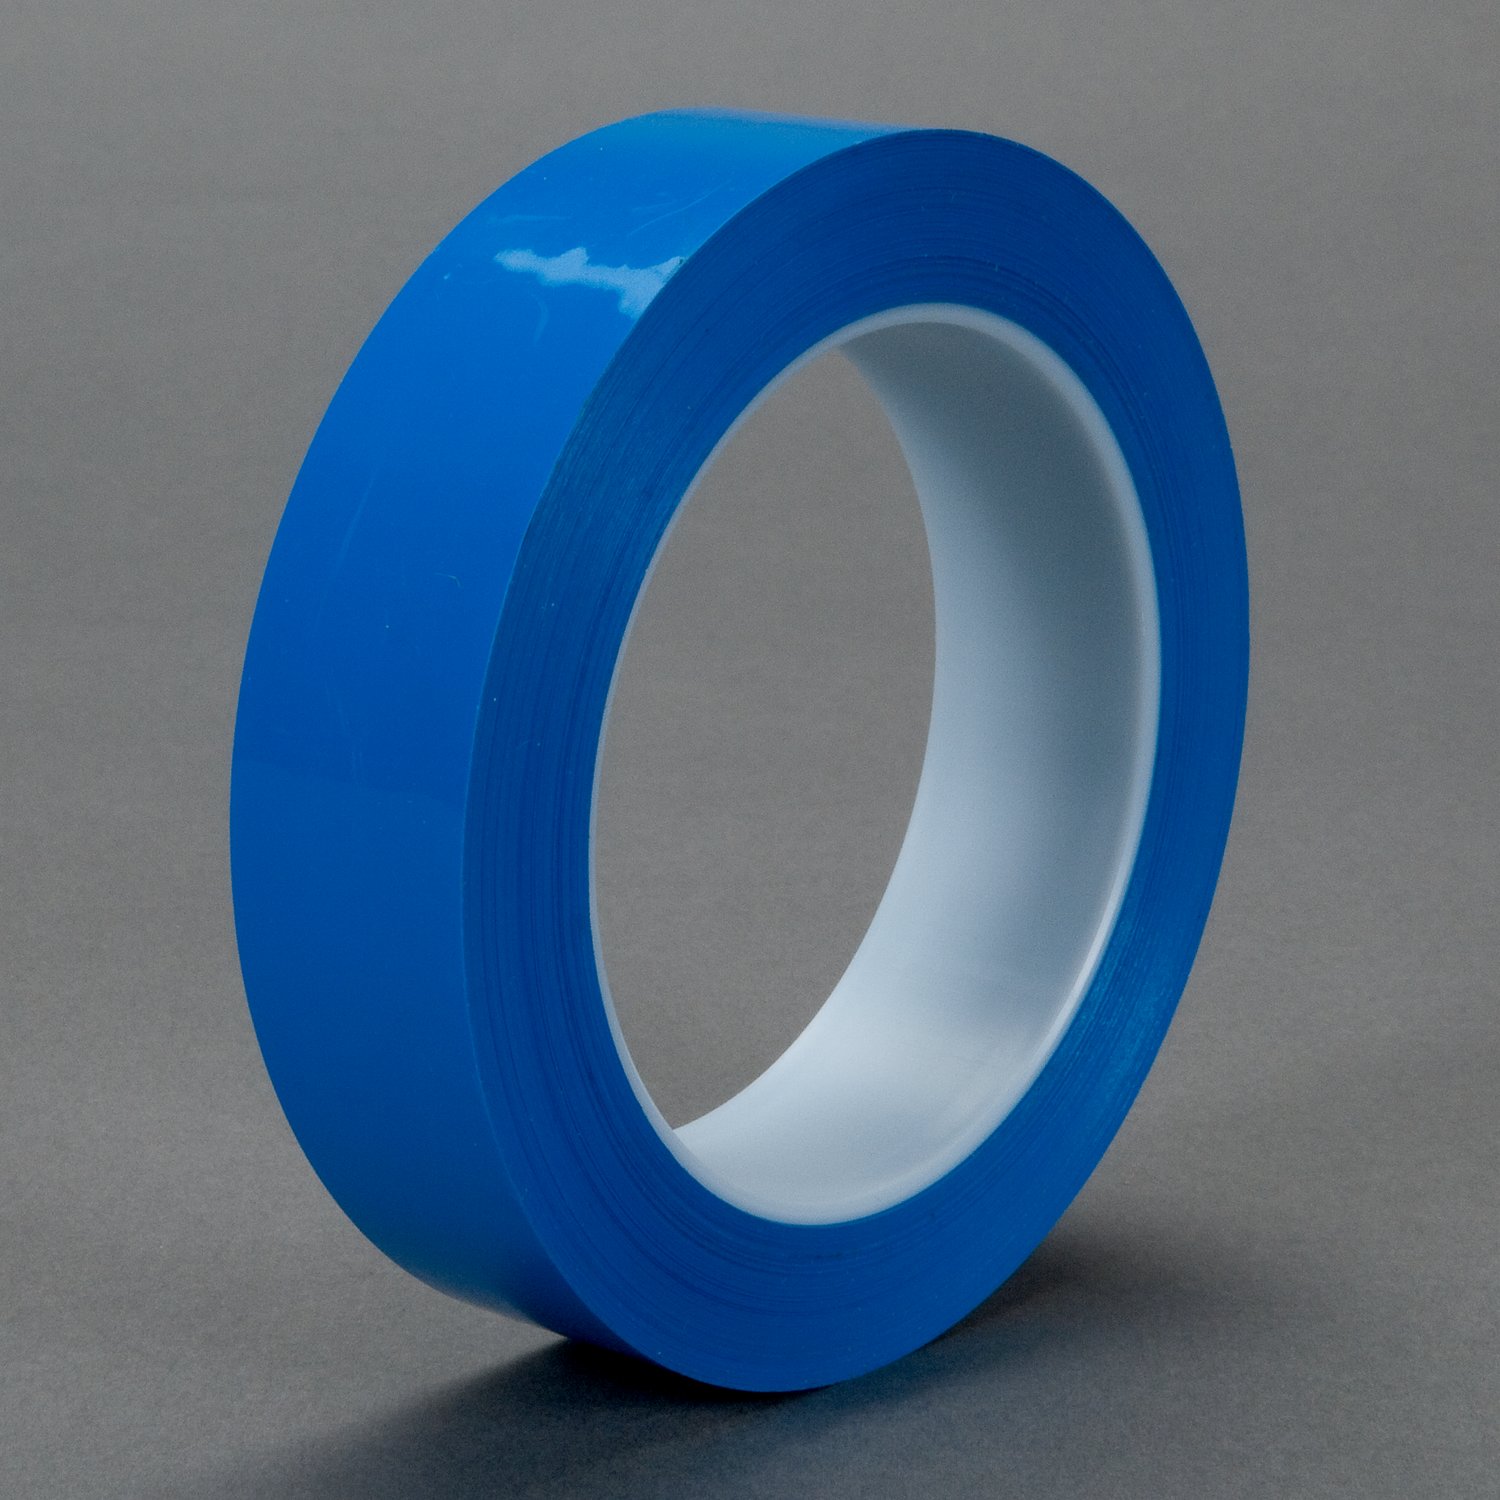 7000028861 - 3M Polyethylene Tape 483, Blue, 1 in x 36 yd, 5.0 mil, 36 rolls per
case